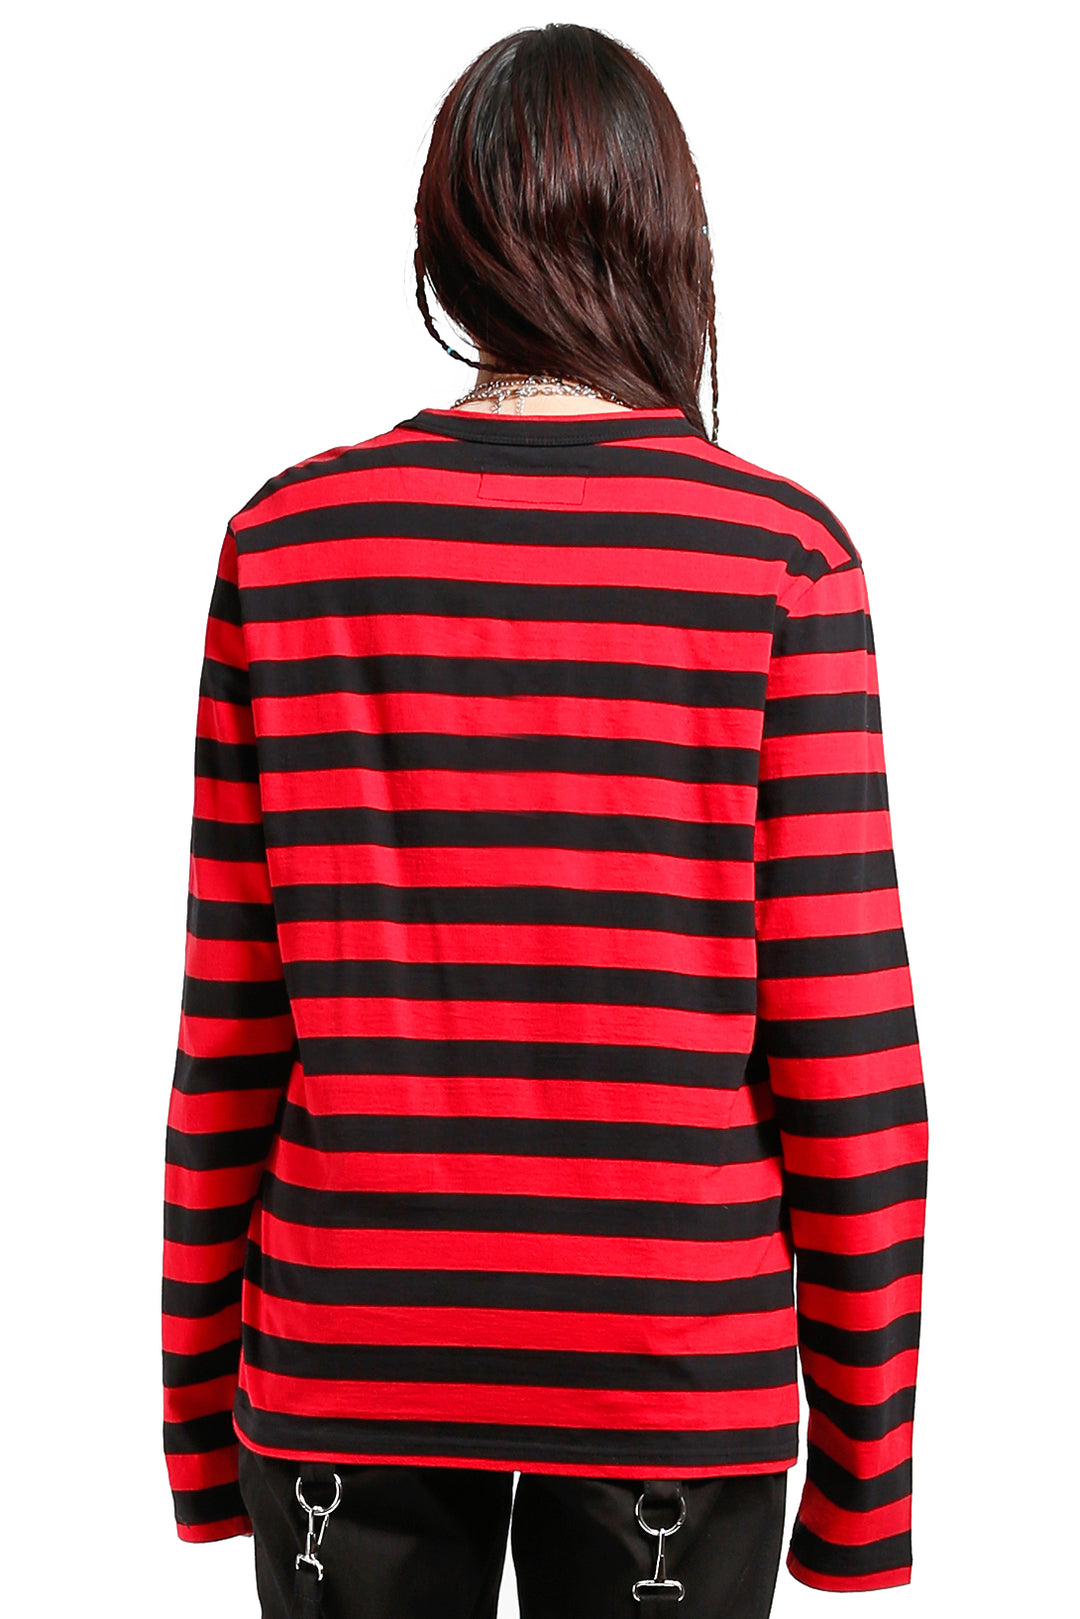 Tripp Stripe Knit Top [Red/Black]